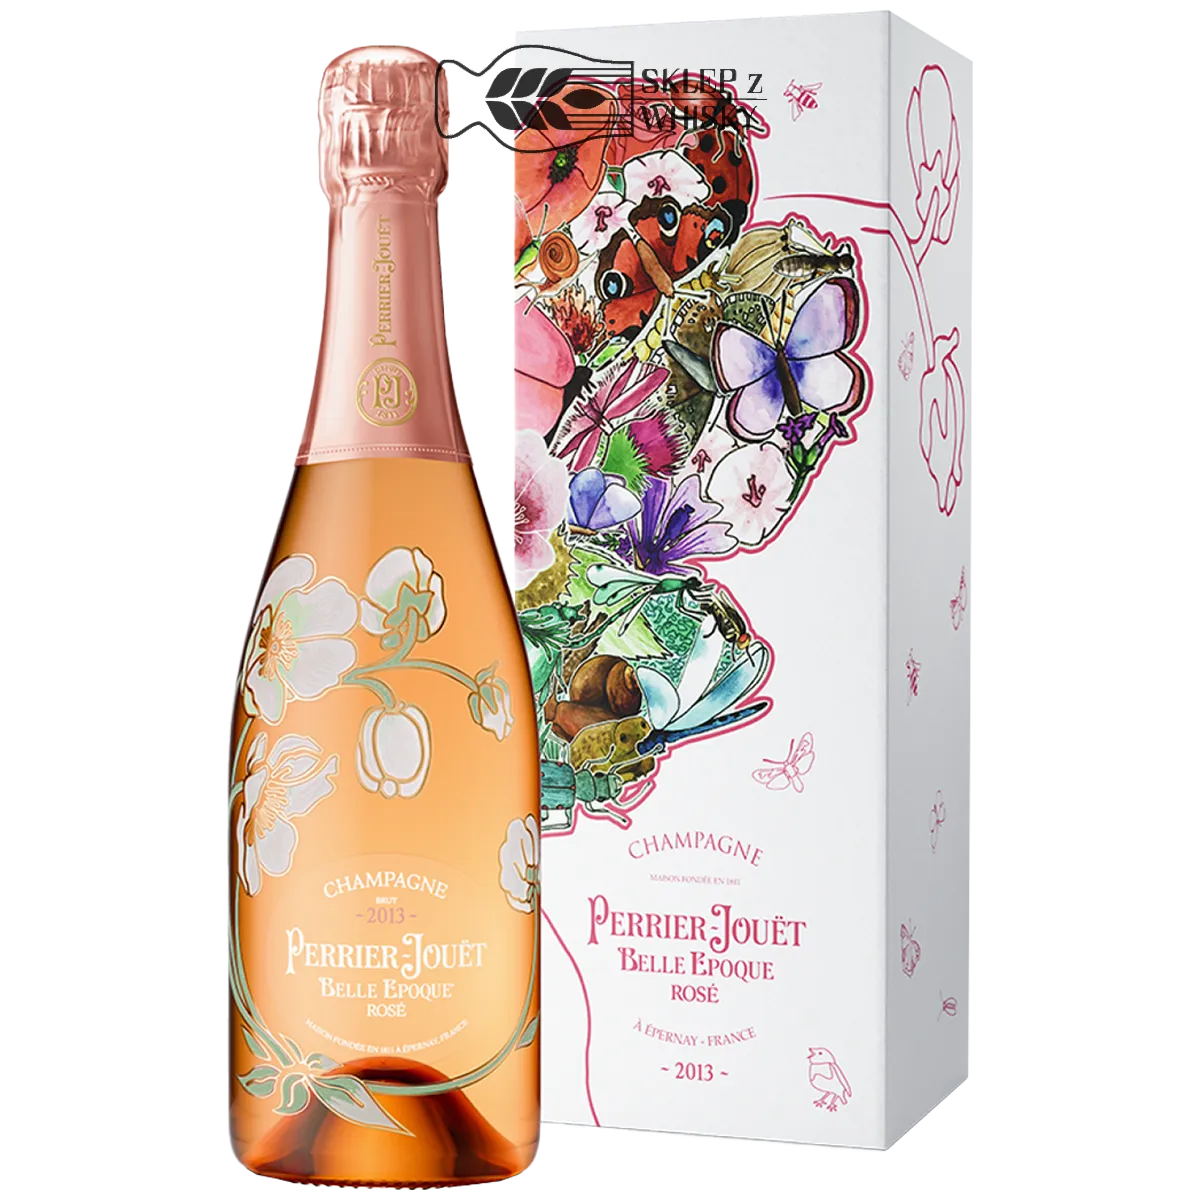 Perrier Jouet Belle Epoque Rose - szampan różowy wytrawny, 750 ml, w pudełku